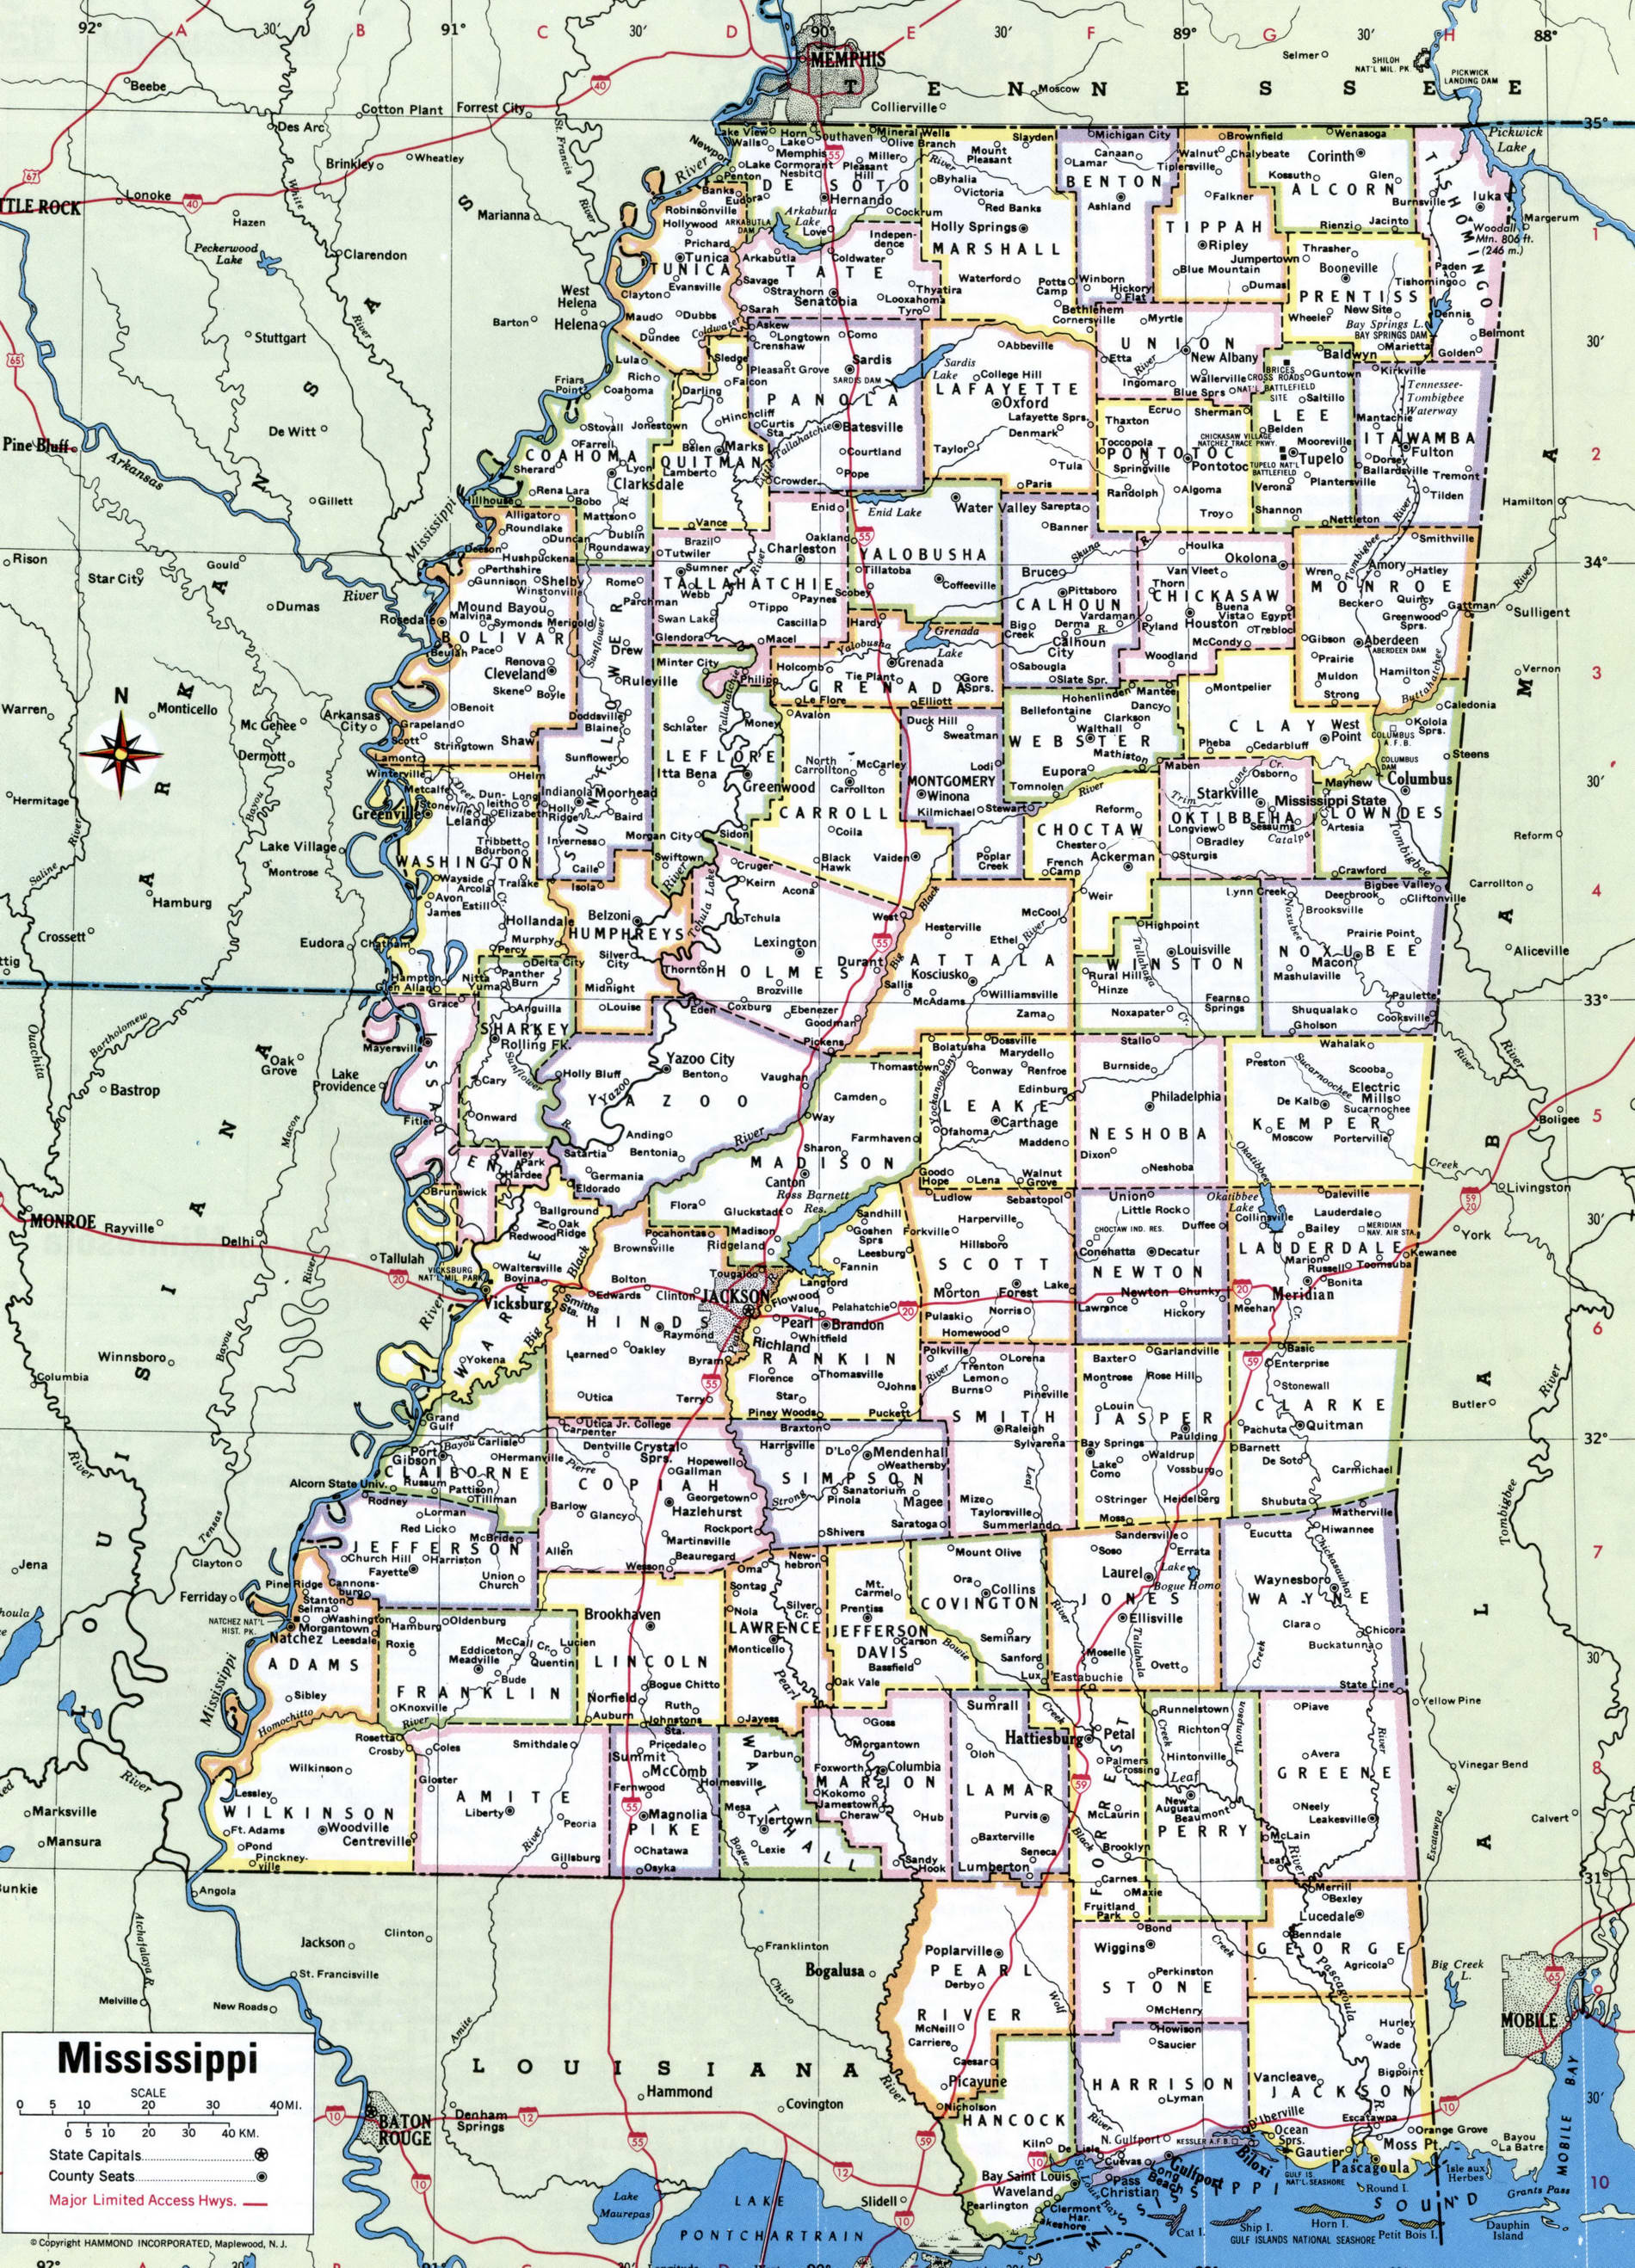 Mississippi Major Cities List